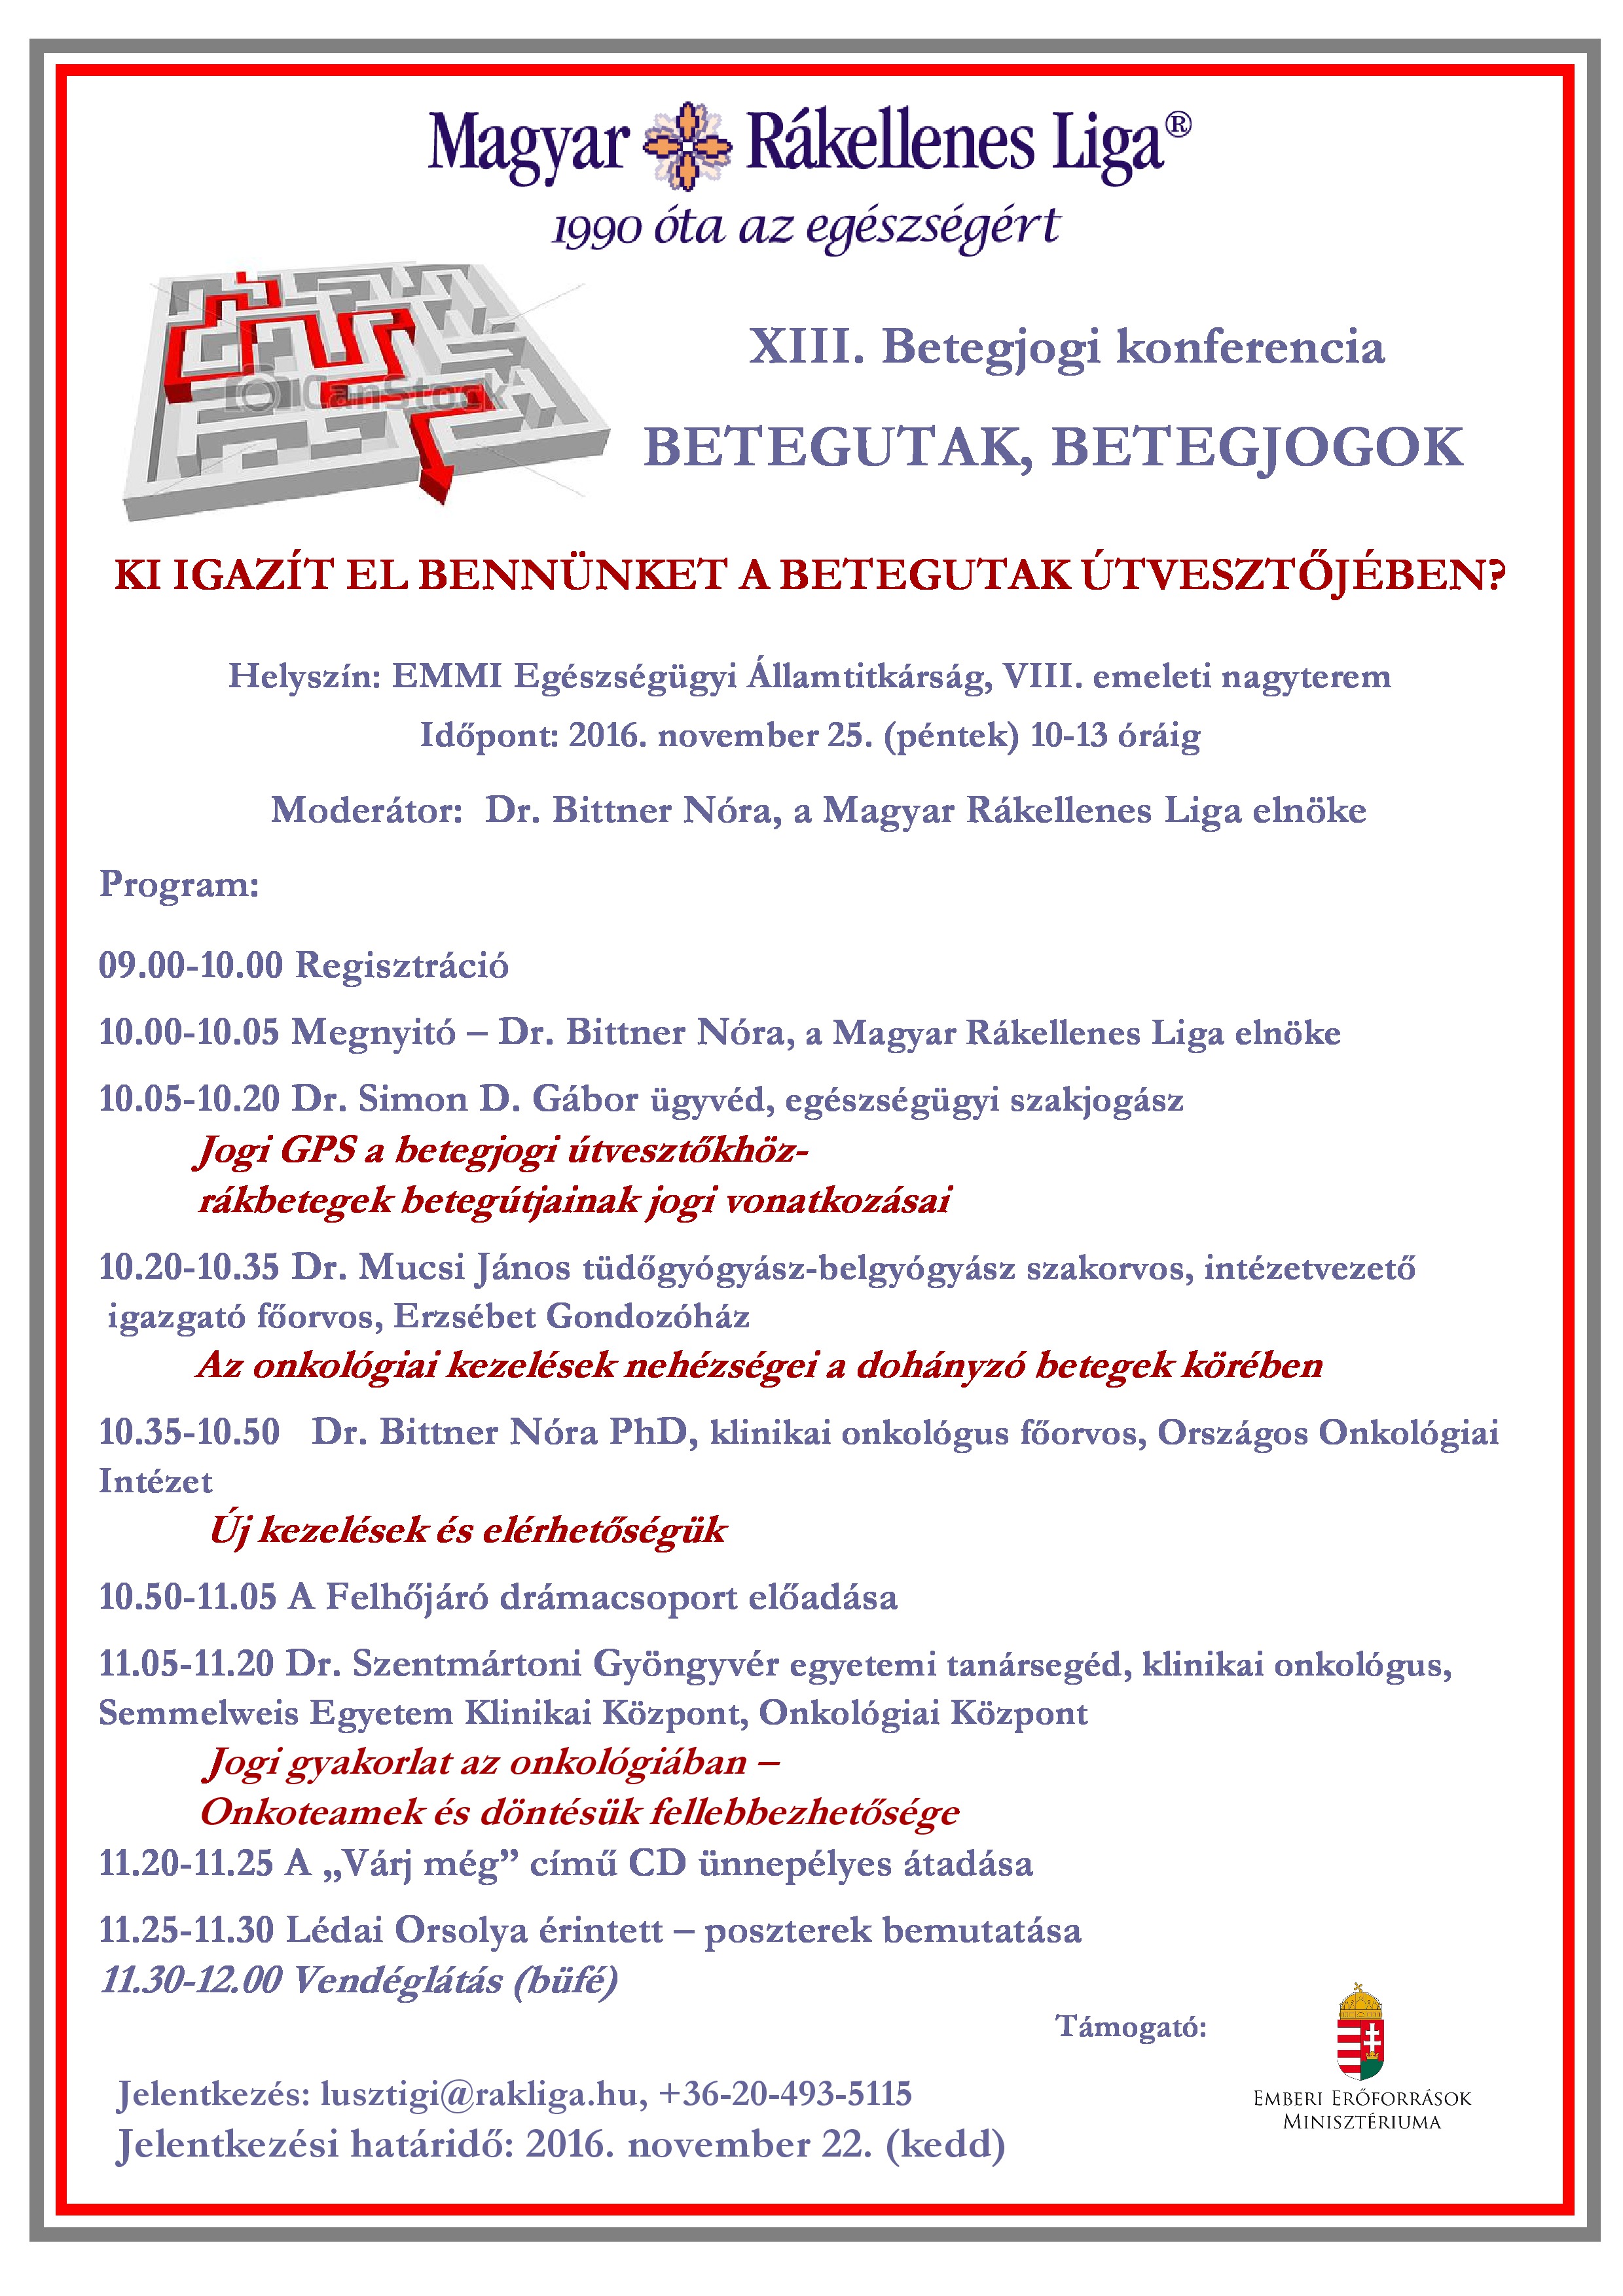 20161125_xiii-betegjogi-konferencia-program-1-page-0